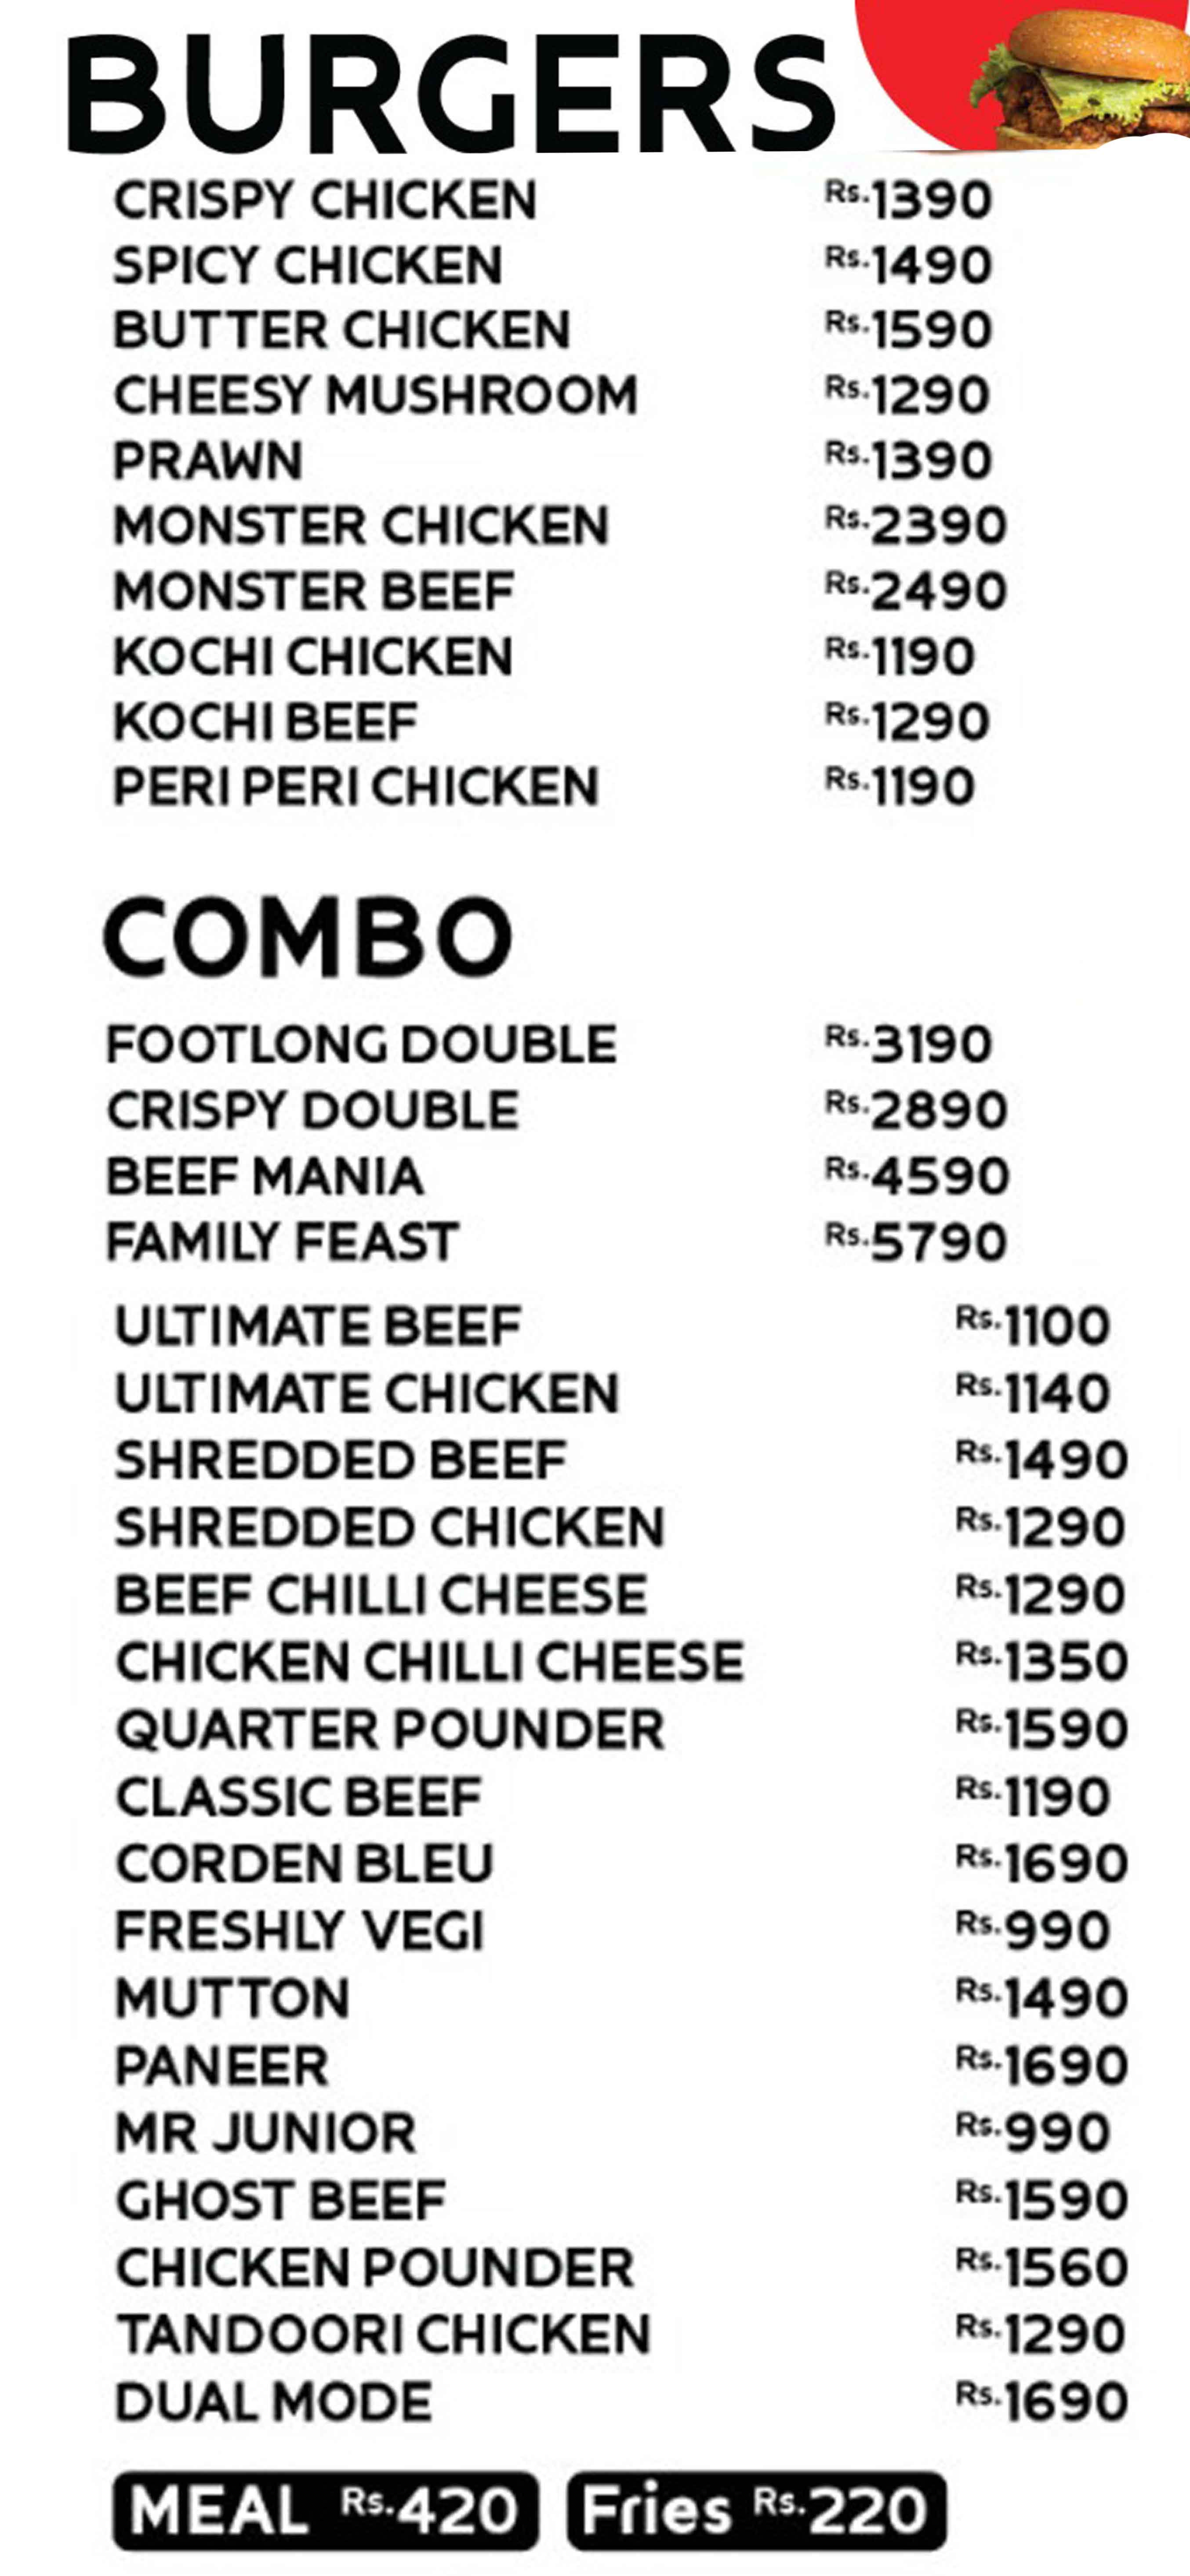 Mr. Burger - Colombo 04 menu